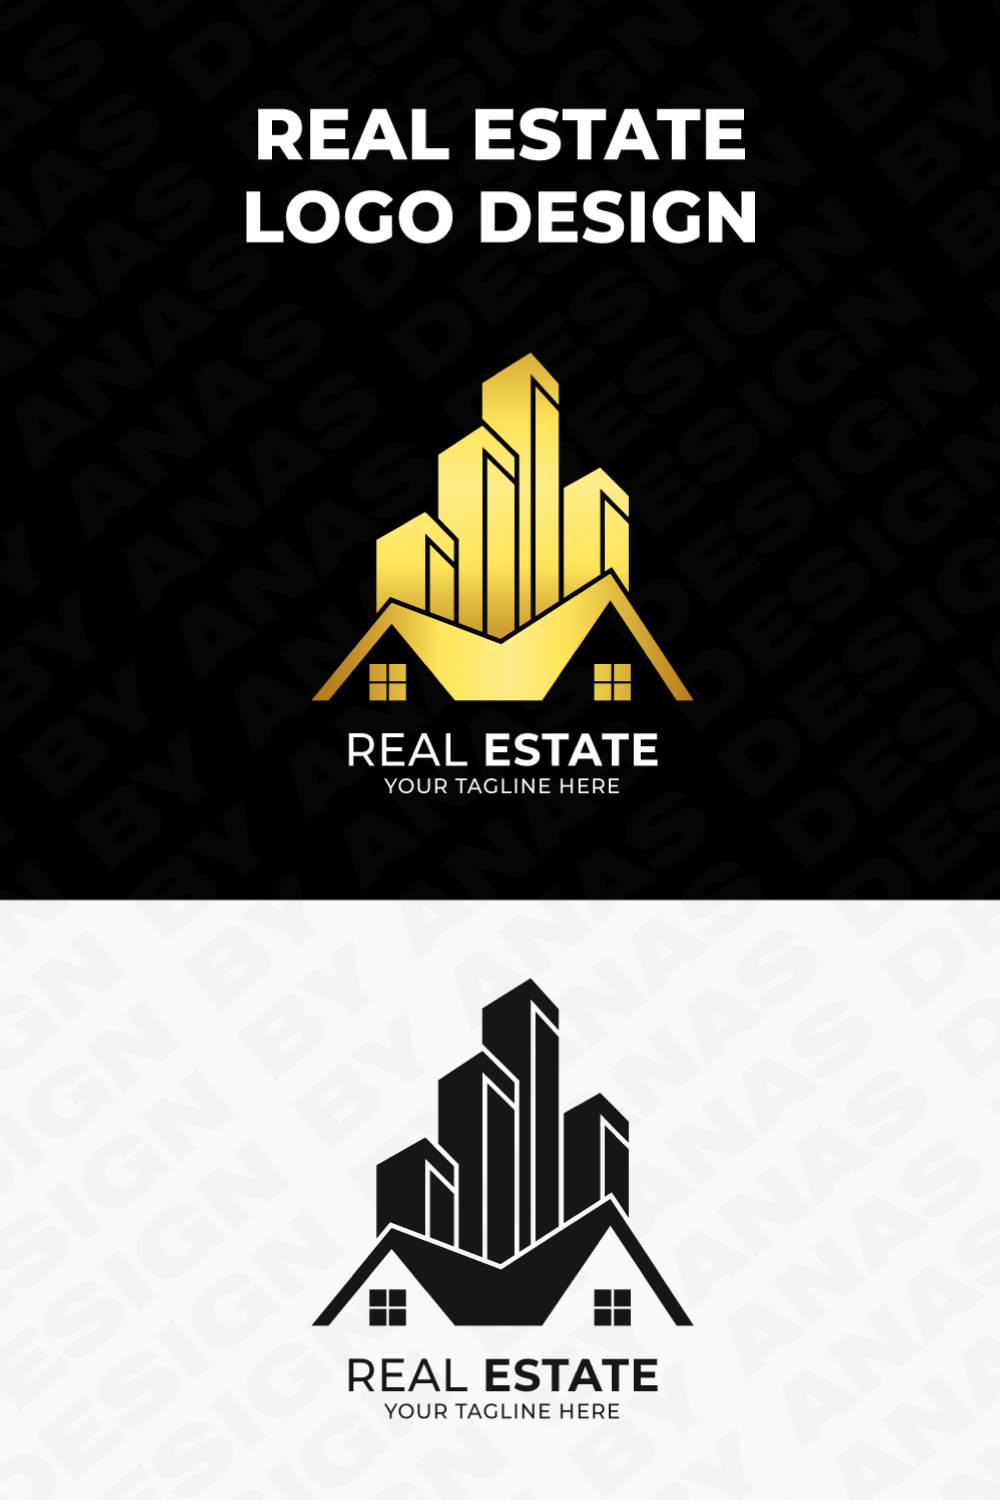 Real Estate Logo Design, Building Logo Template – ONLY $9 pinterest preview image.